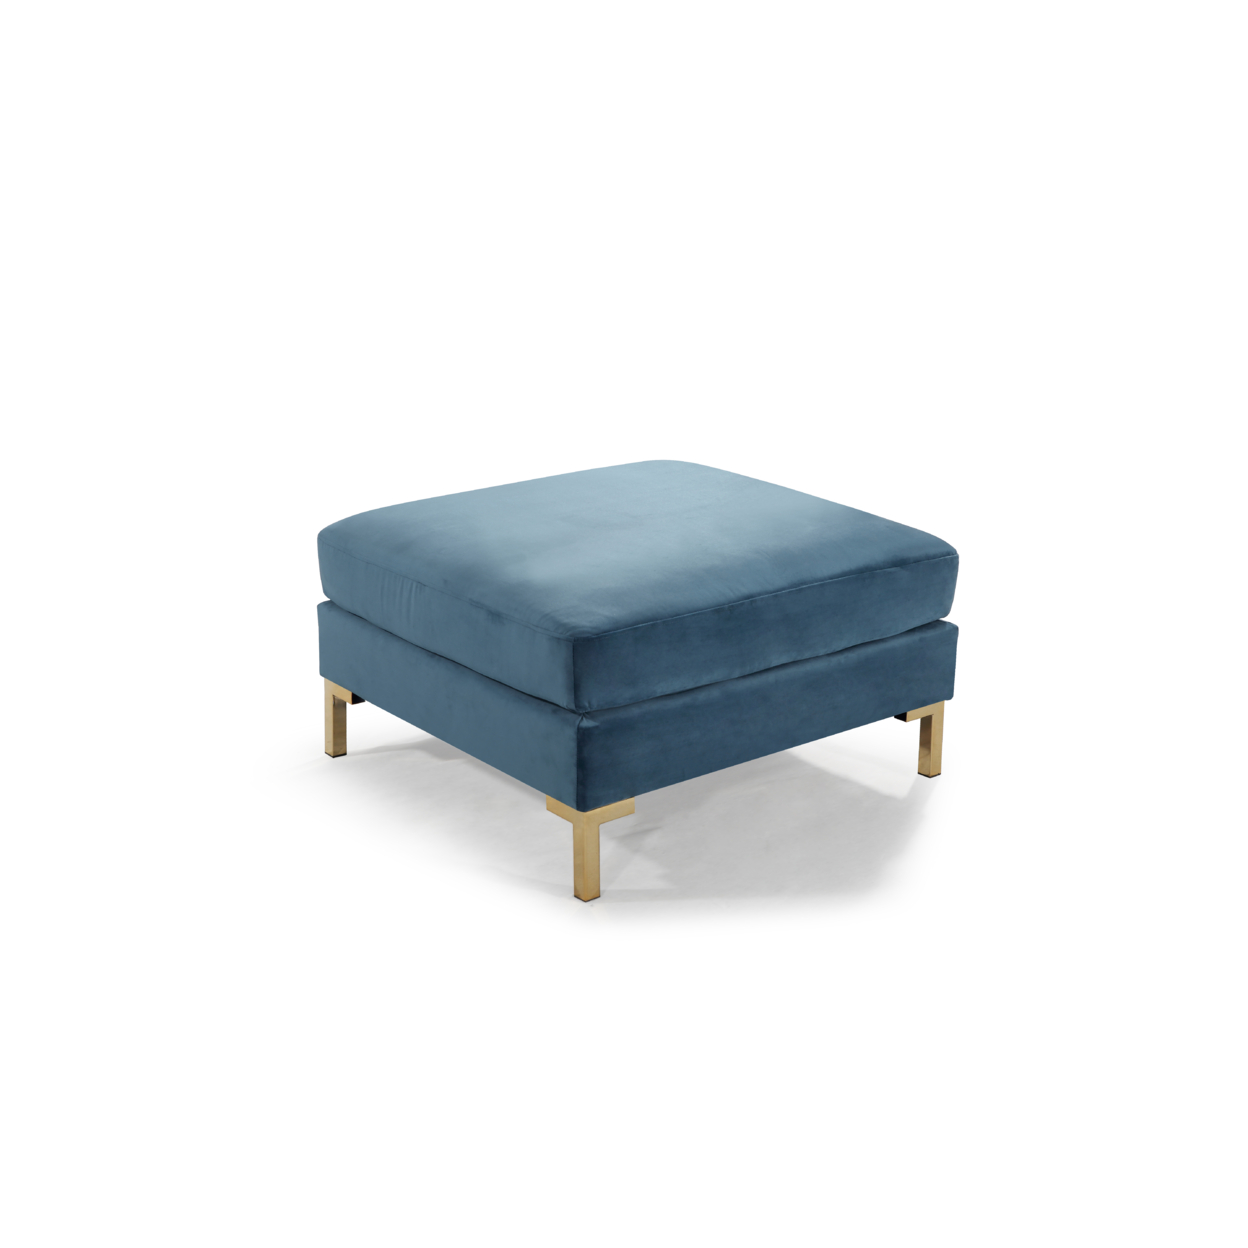 Greco Modular Chaise Ottoman Coffee Table Cushion Bench Solid Gold Tone Metal Y-Leg - Blush